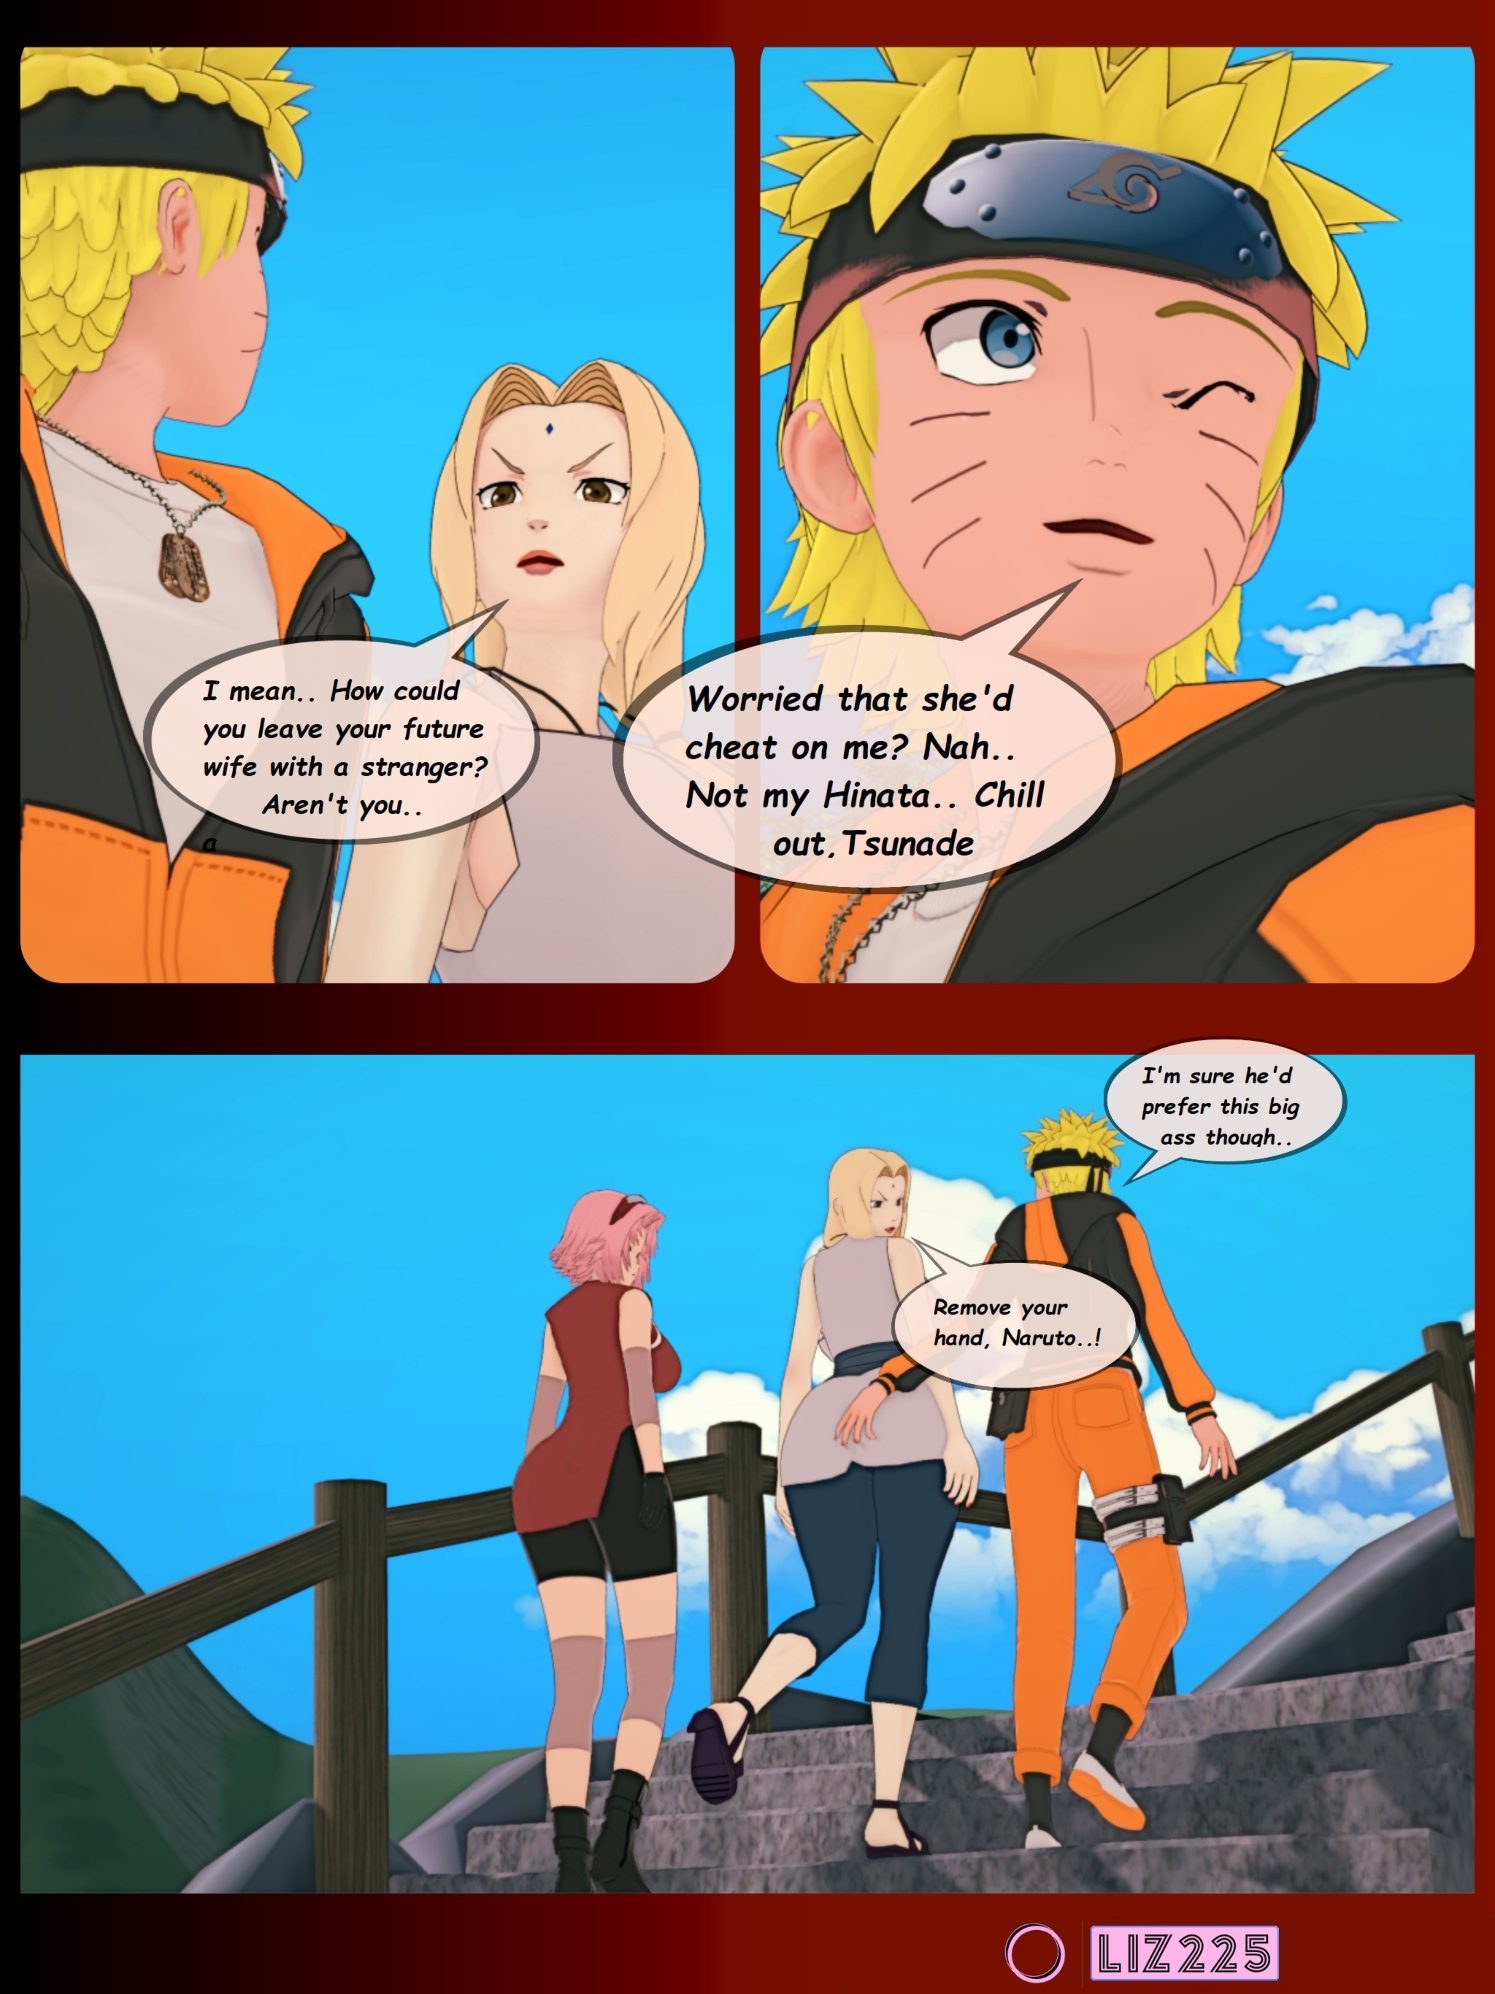 Naruto: Untold tales – Chapter 1 [LIZ225]